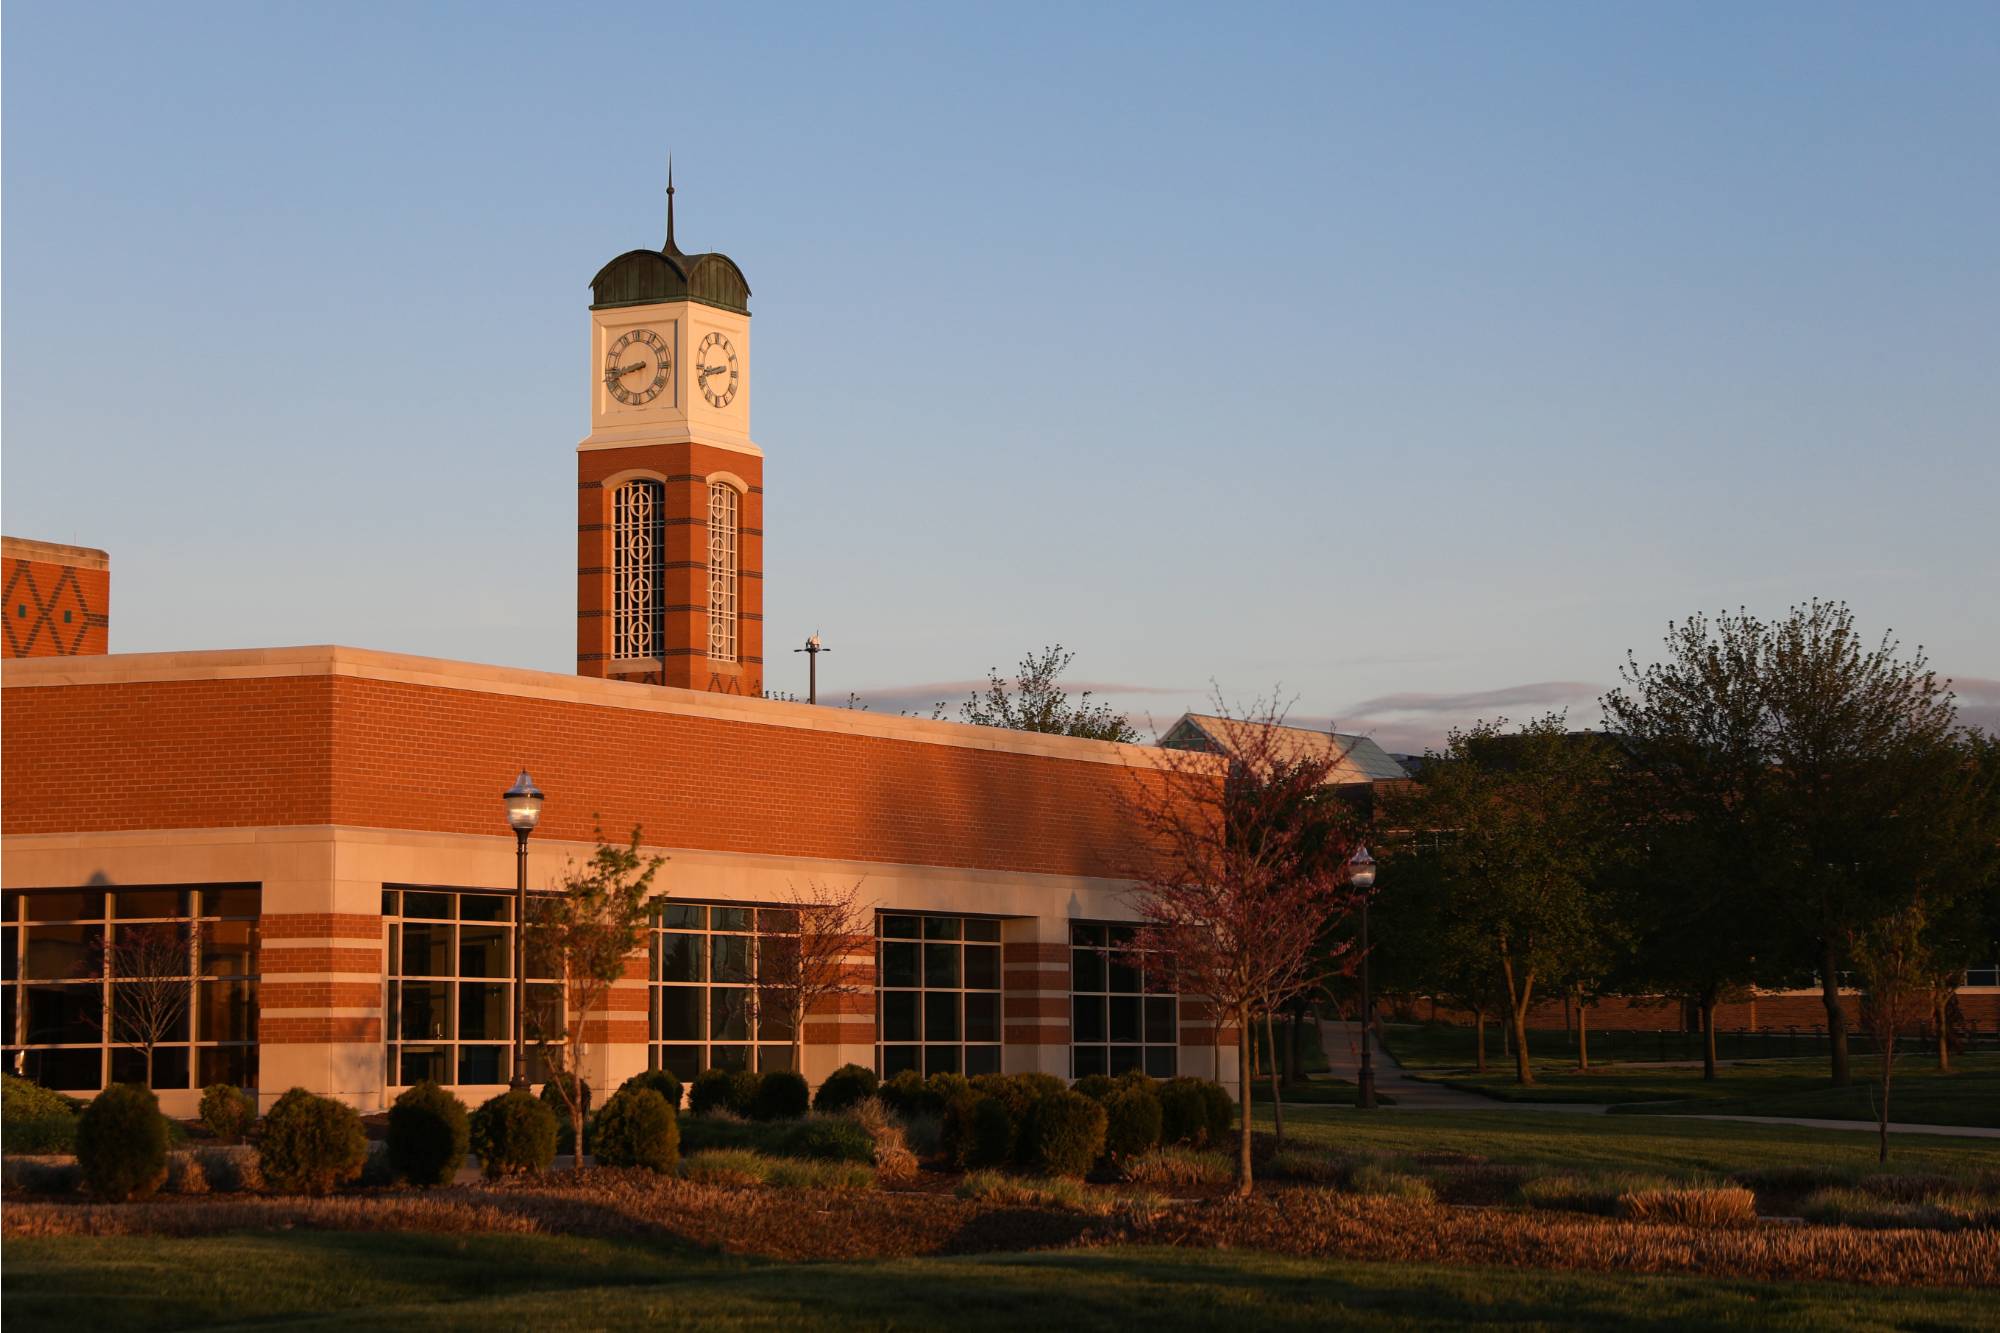 Student Services Center